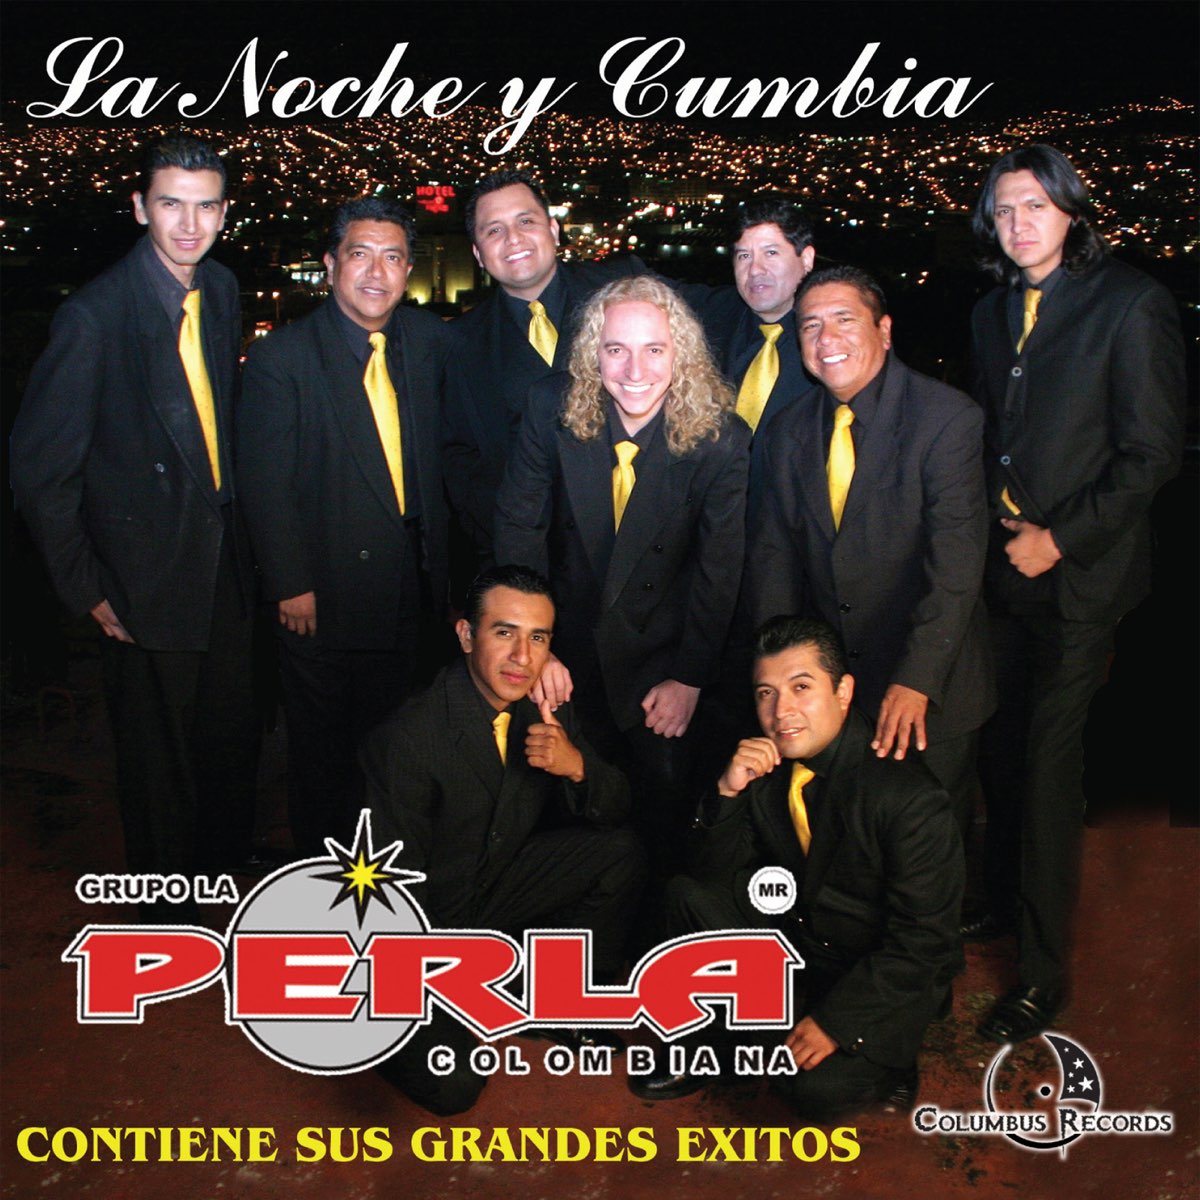 La Noche y Cumbia by Grupo Perla Colombiana on Apple Music